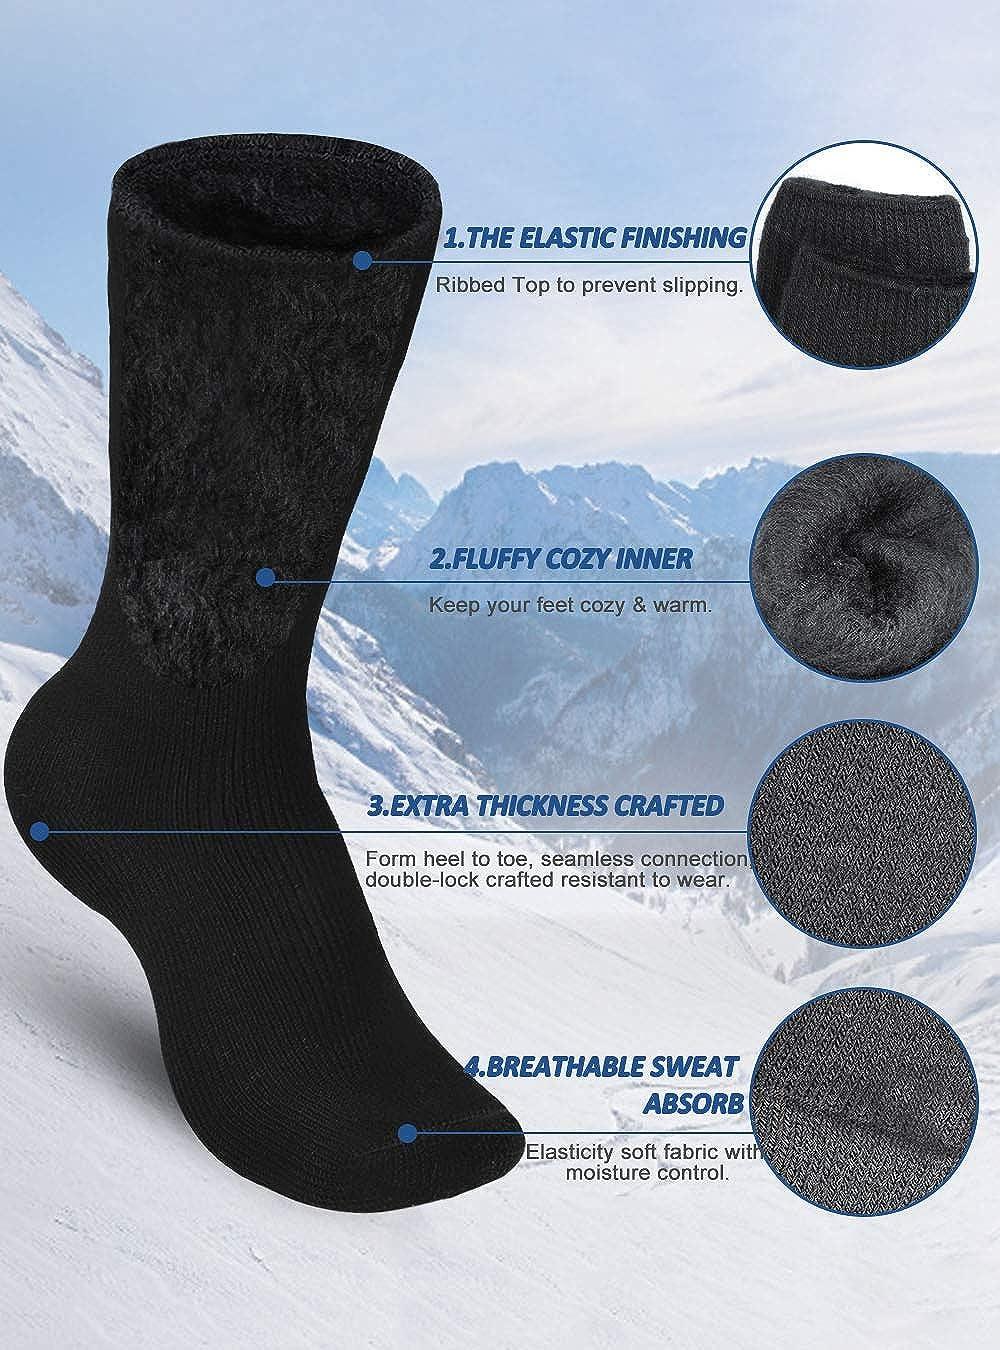 BRUBAKER Heat my Feet Thermal Socks - 2 Pairs - Multiple Colors